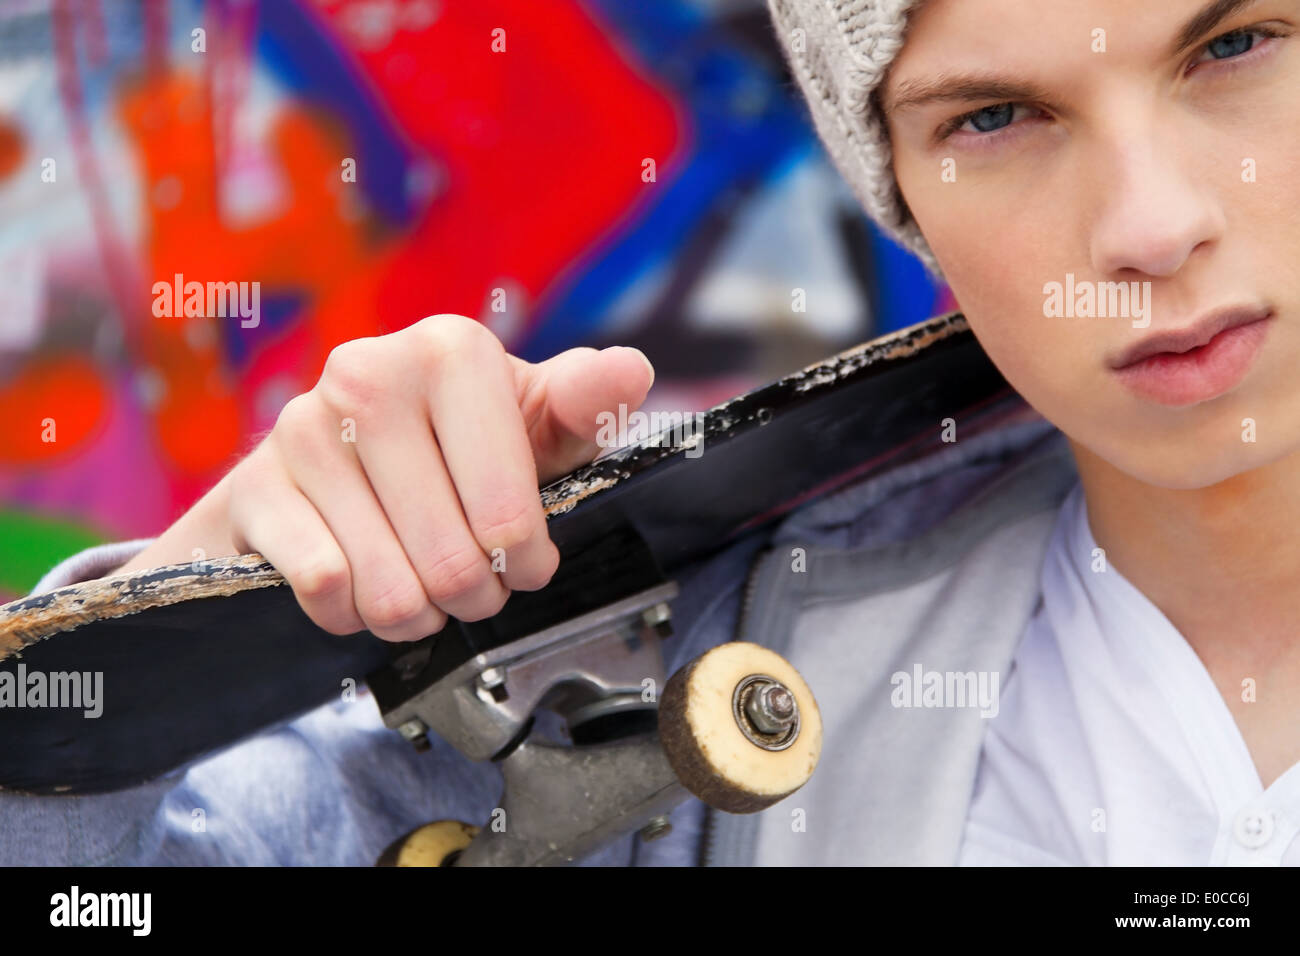 A cool looking youthful man before graffiti, Ein cool blickender Jugendlicher Mann vor Graffiti Stock Photo